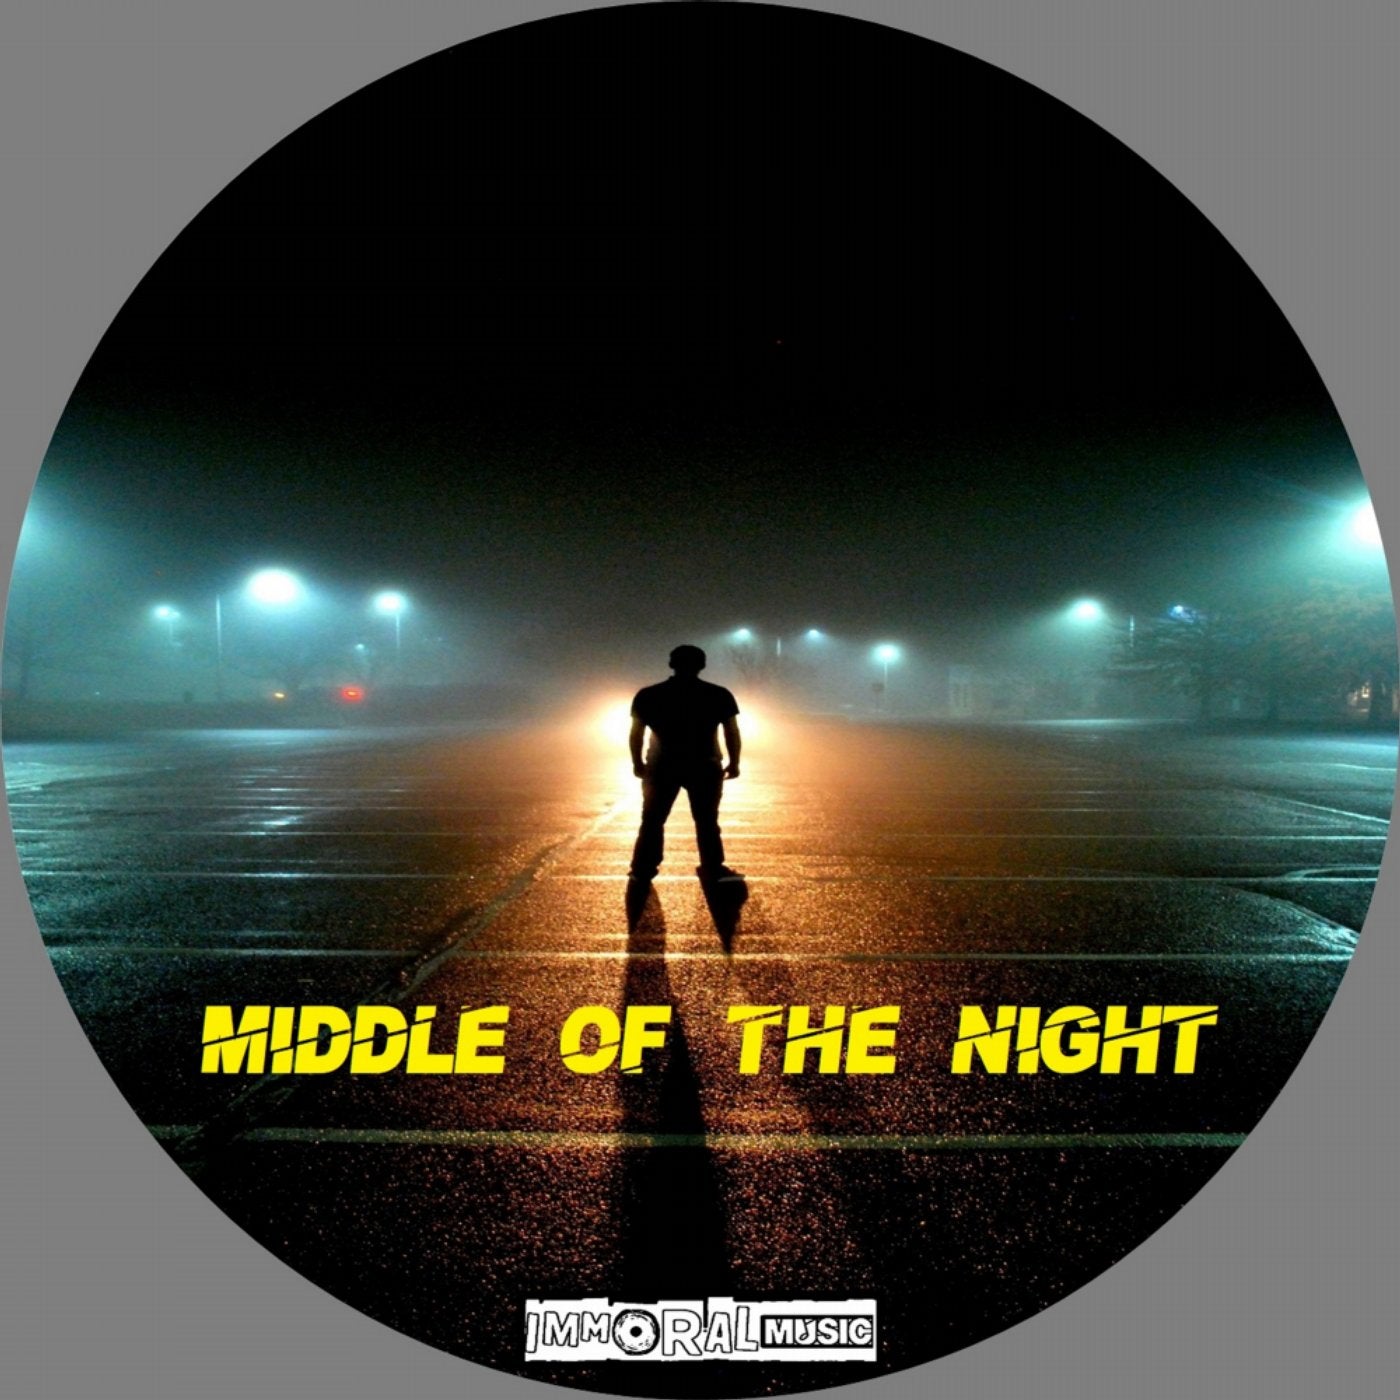 Middle of the night mp3. Middle of the Night. Middle of the Night обложка. In the Middle of the Night картинки. Трек Middle of the Night.